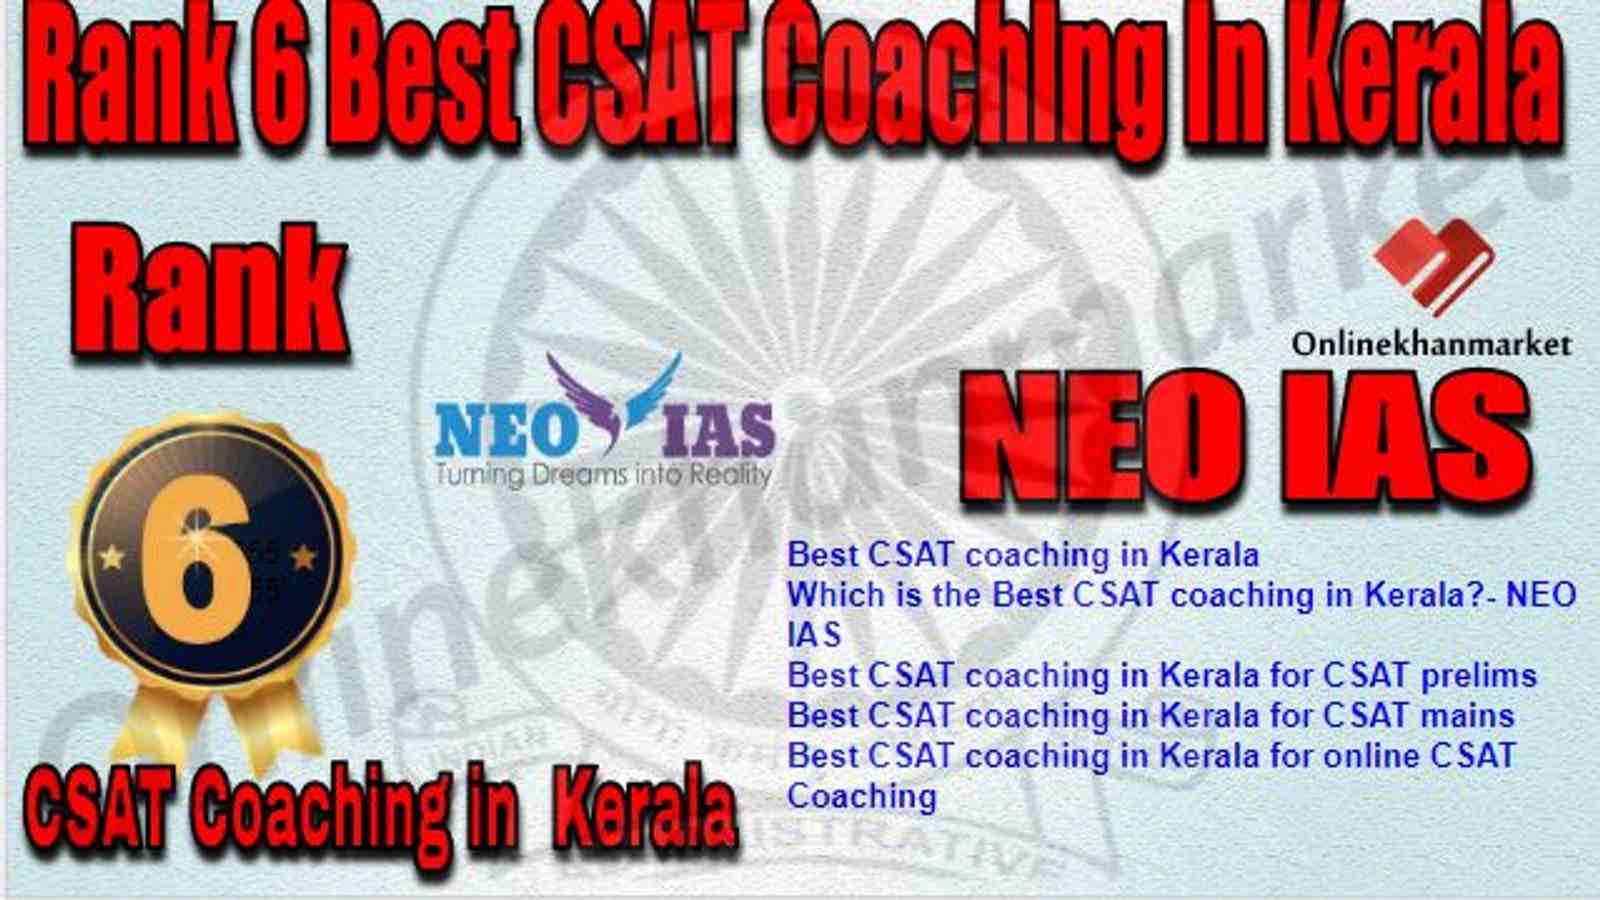 Rank 6 Best CSAT Coaching in kerala